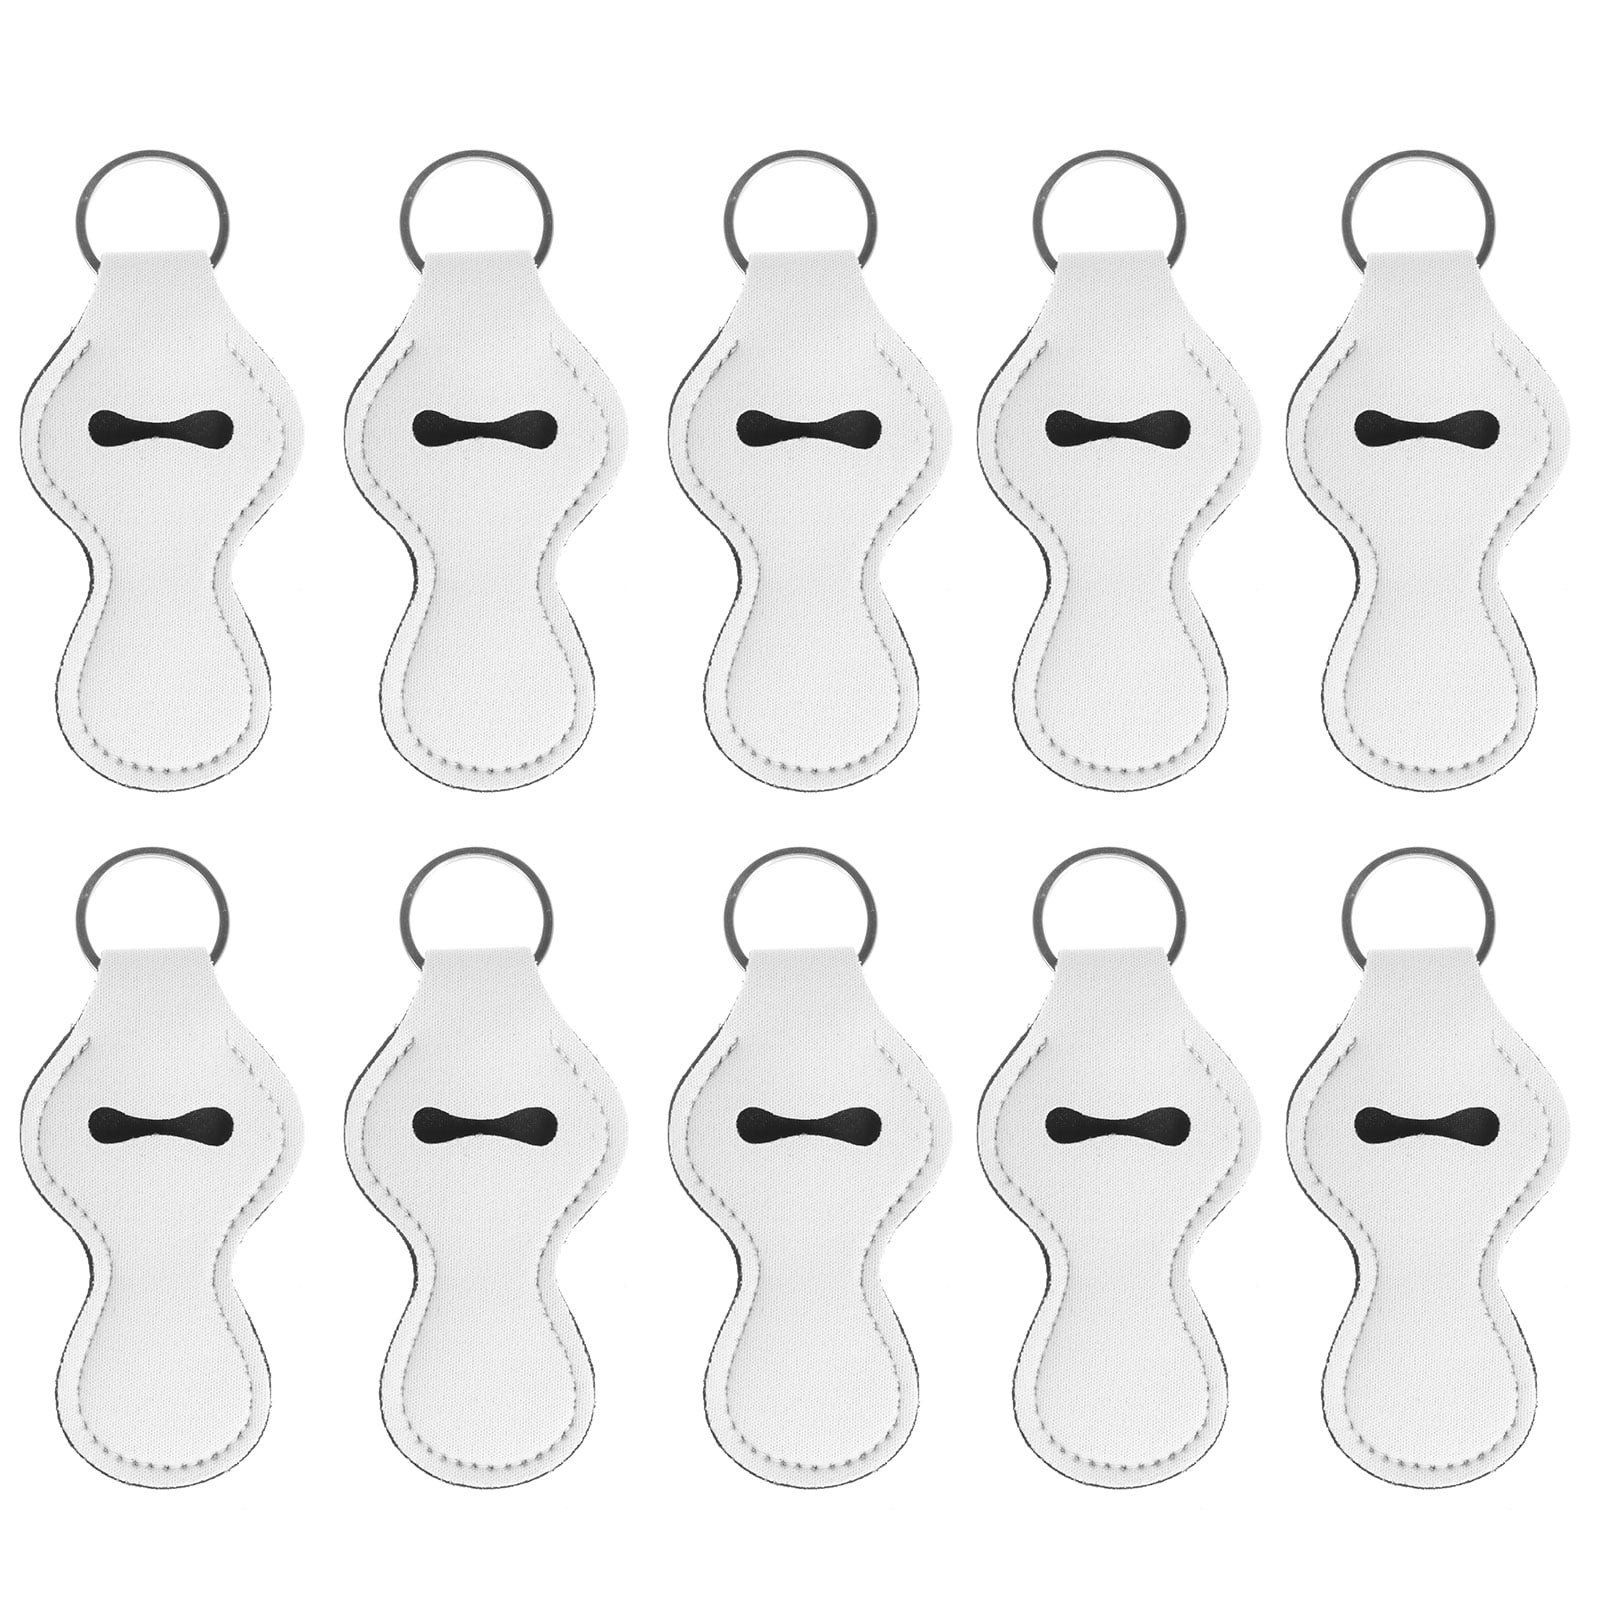 10 Pieces Sublimation Blanks Chapstick Holder Keychain, Neoprene Lip ...